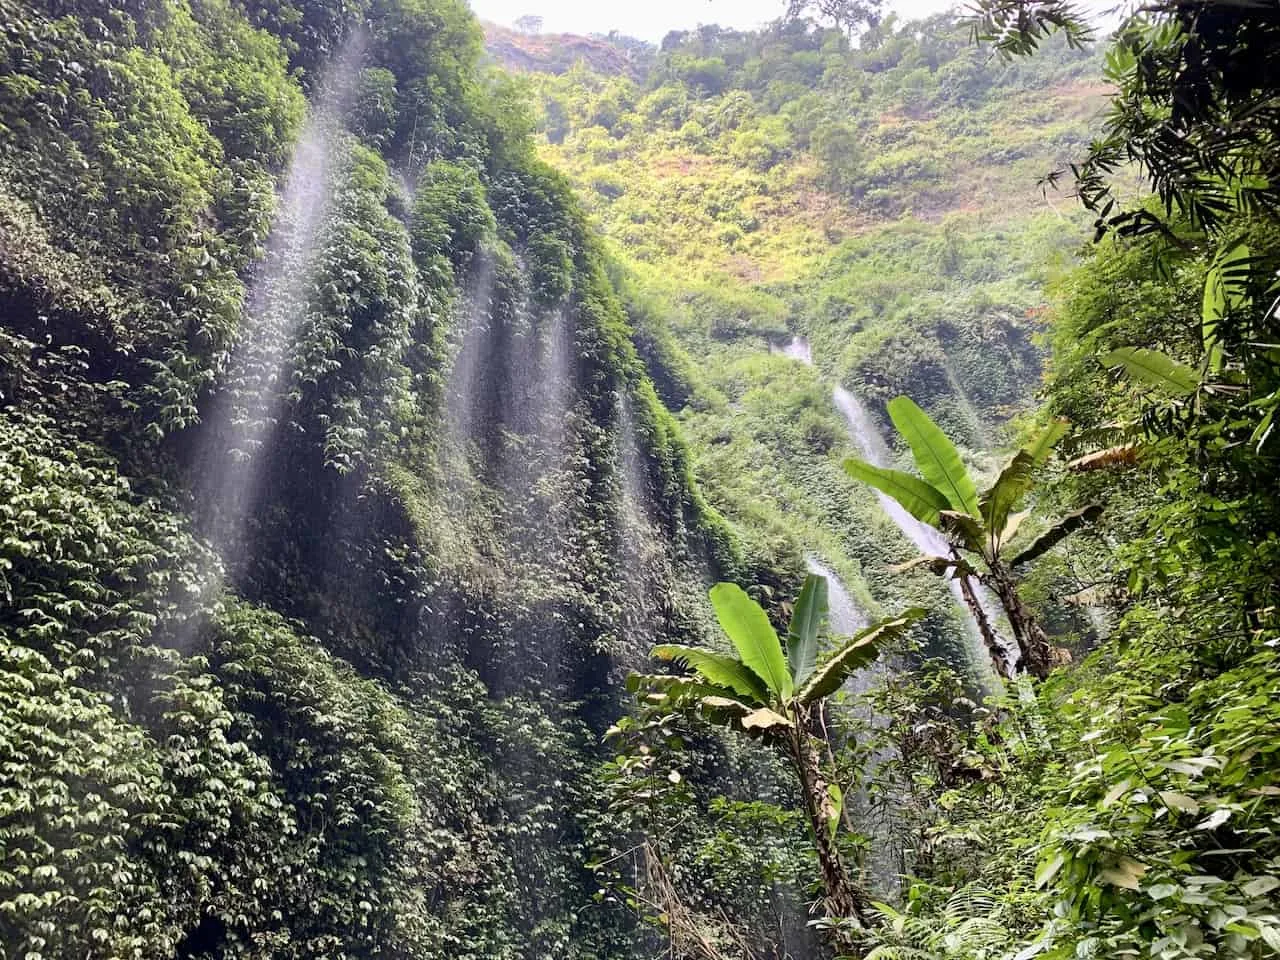 Best Indonesia Waterfalls